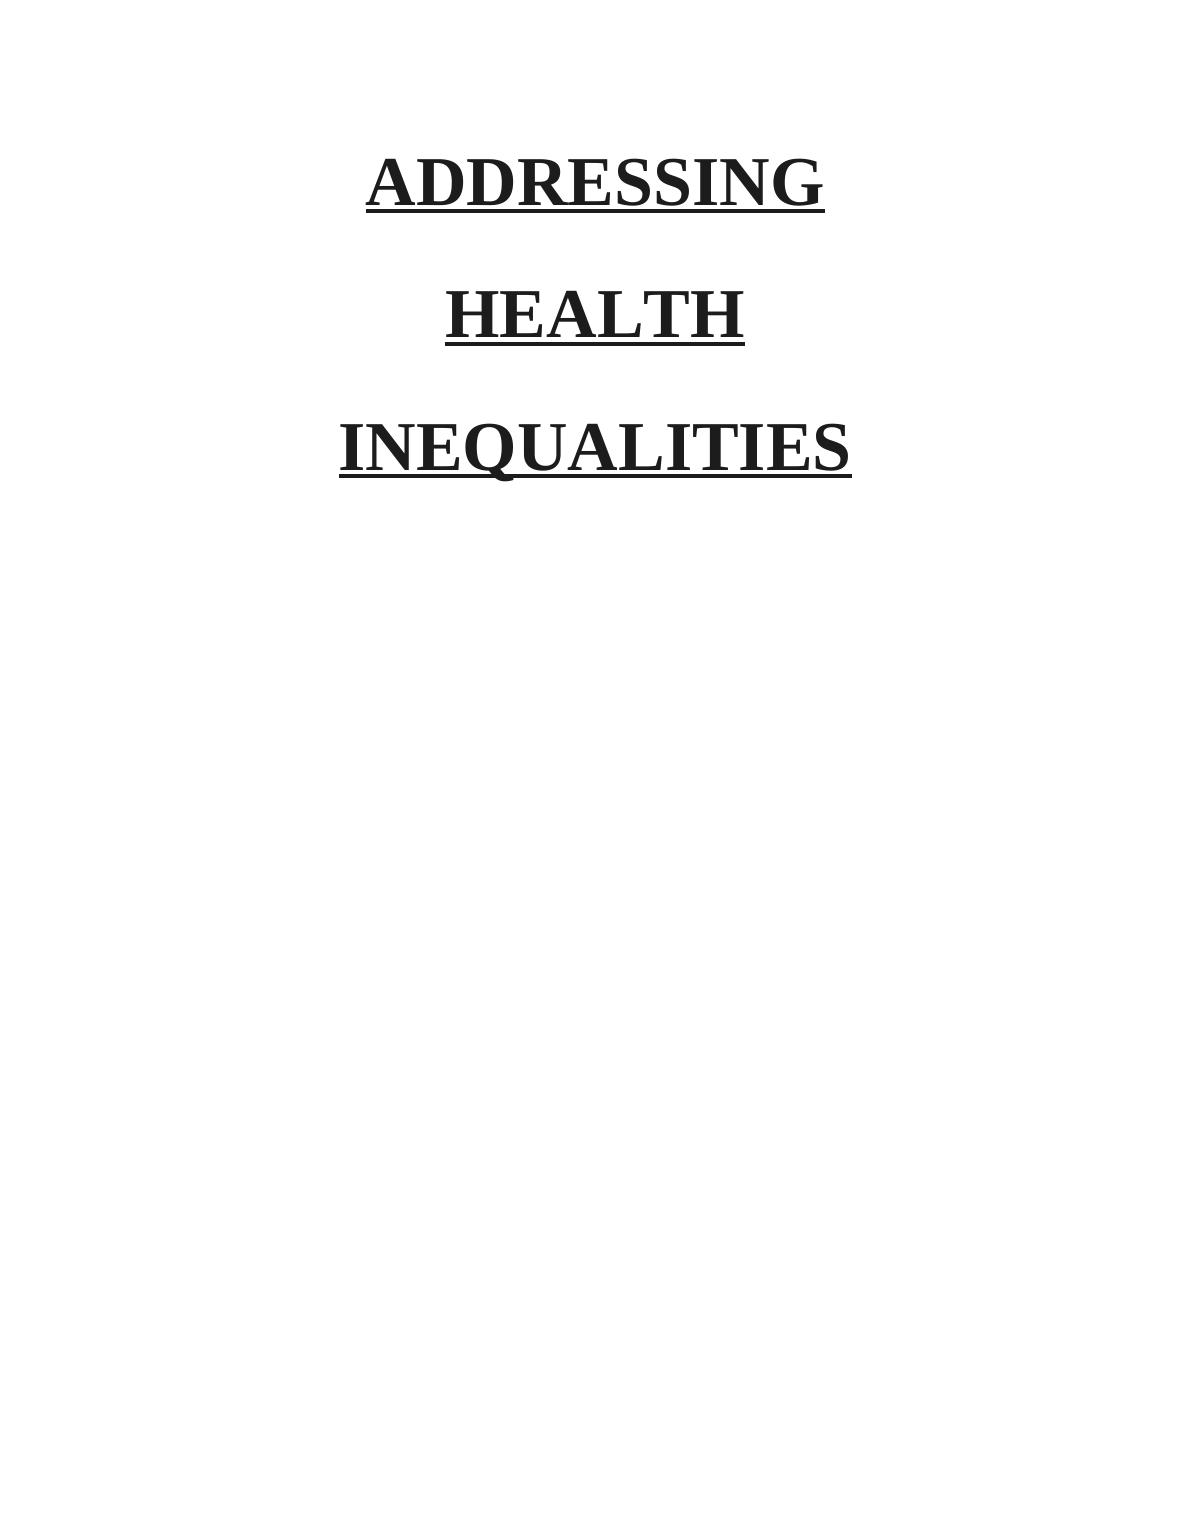 Addressing Health Inequalities - Assignment_1